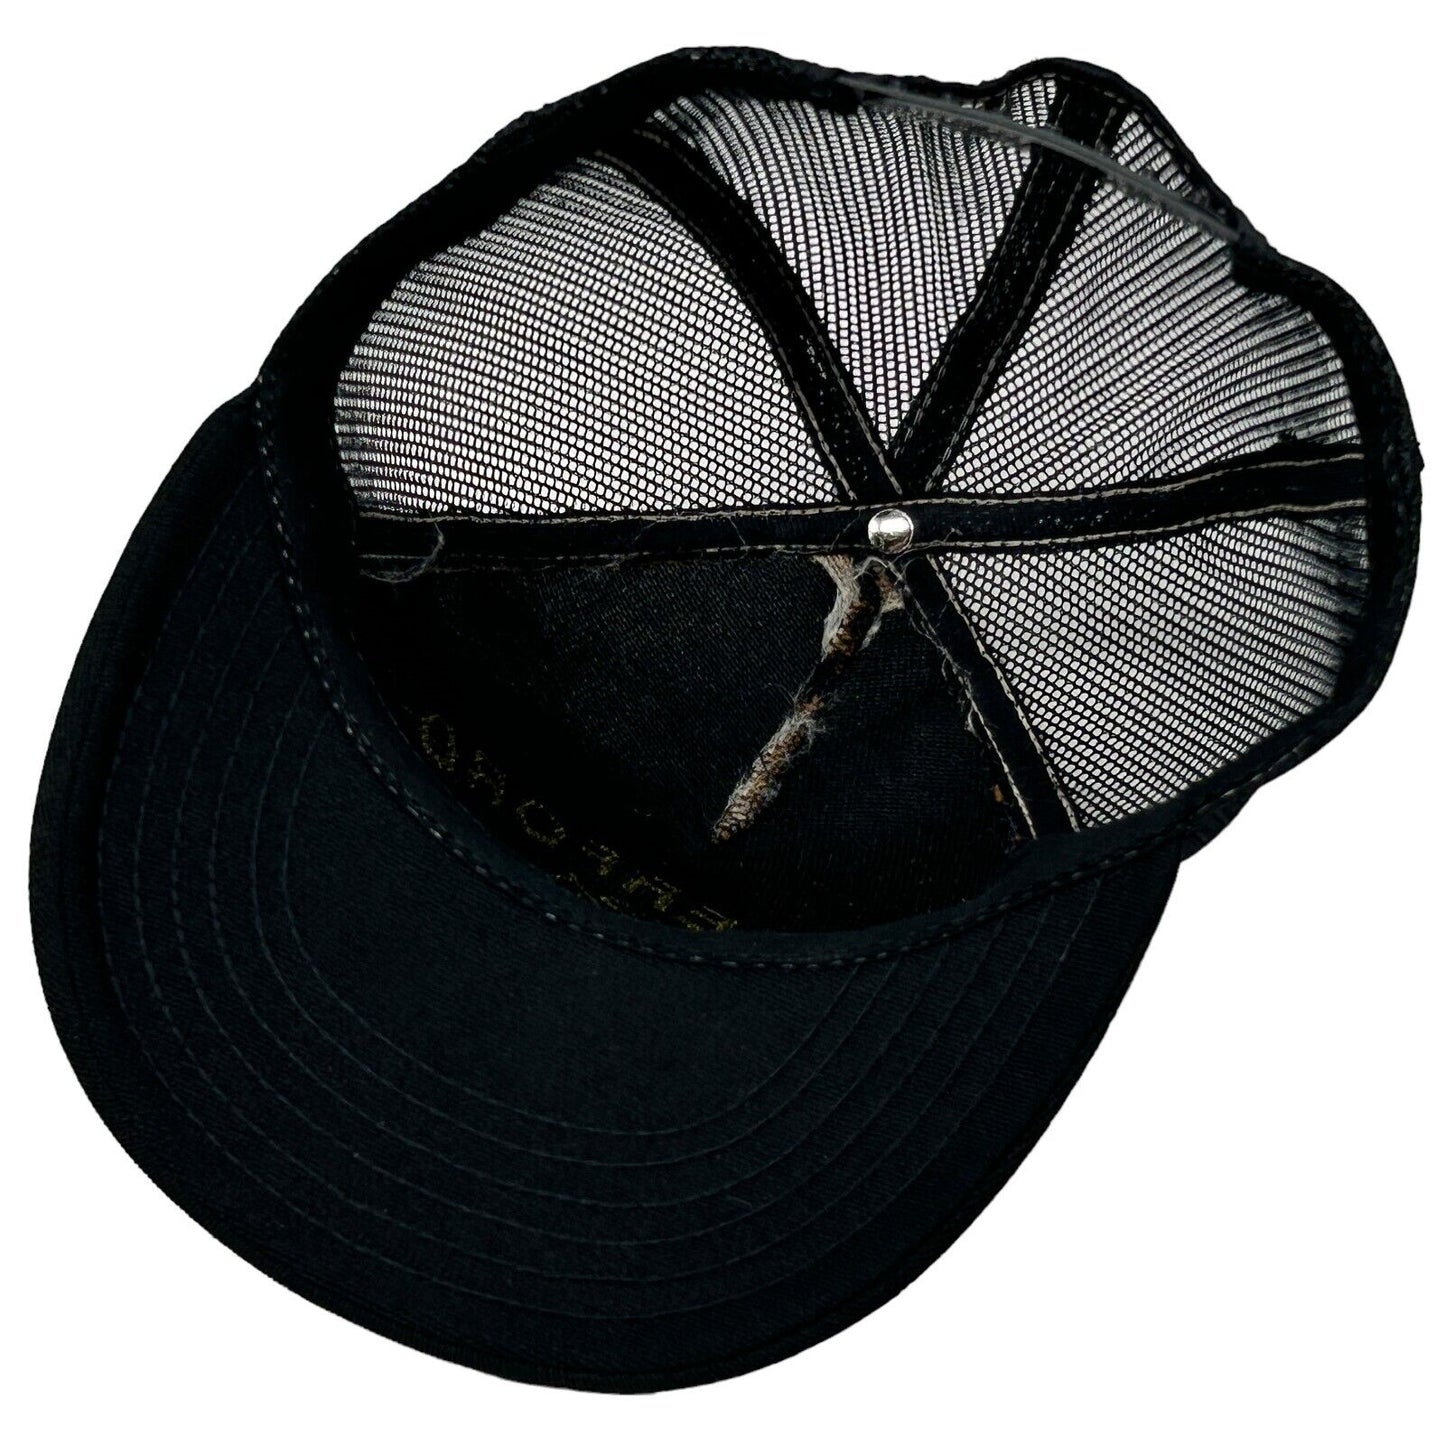 Waterford 3 Nuclear Power Plant Vintage 80s Trucker Hat Black Mesh Baseball Cap